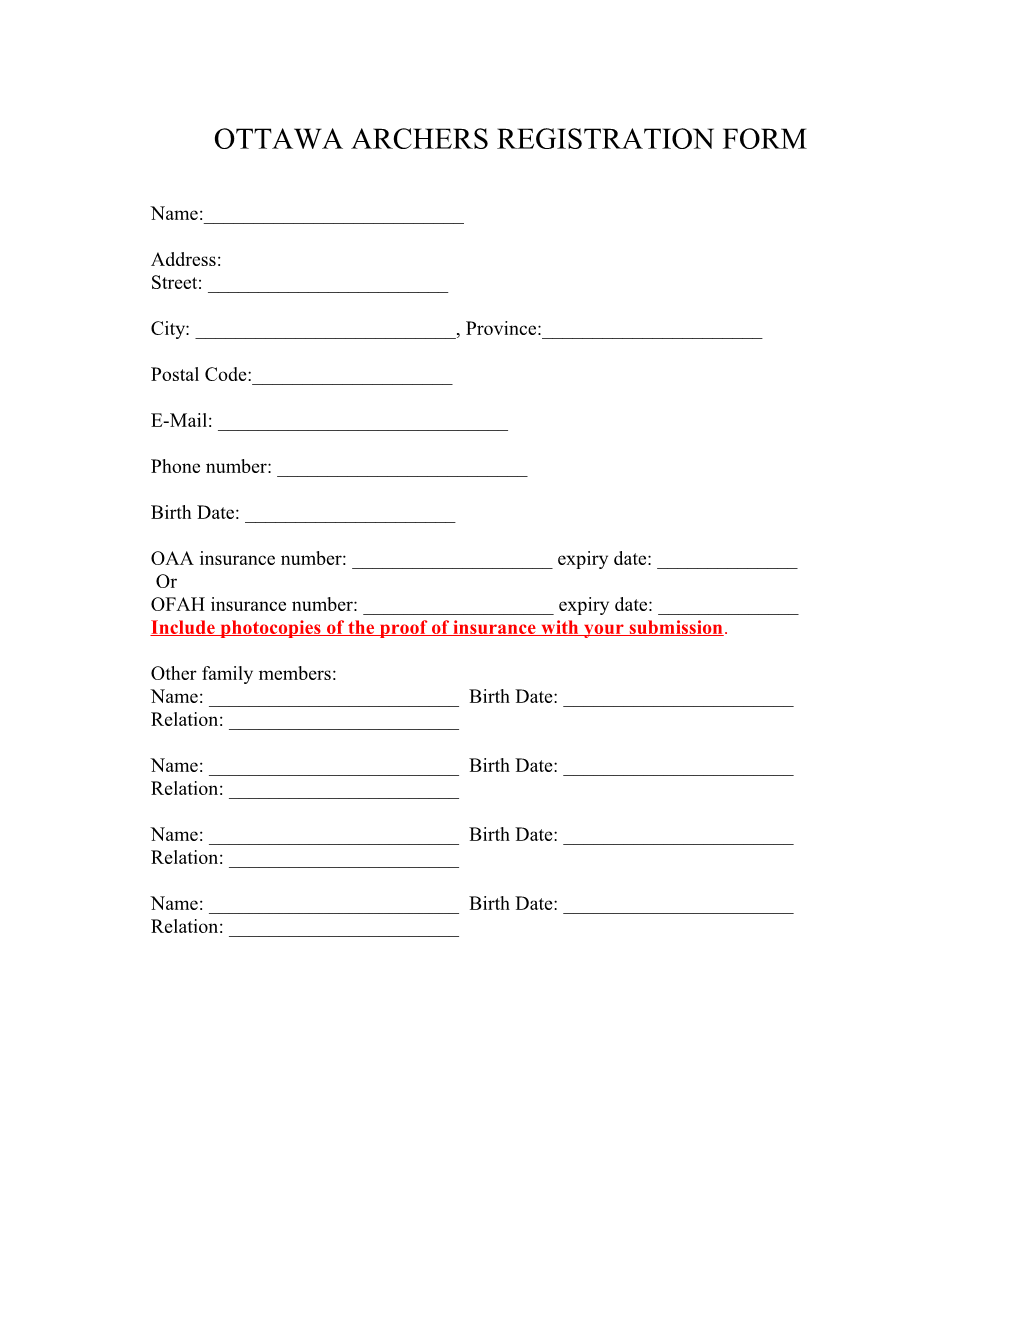 Nepean Archers Registration Form